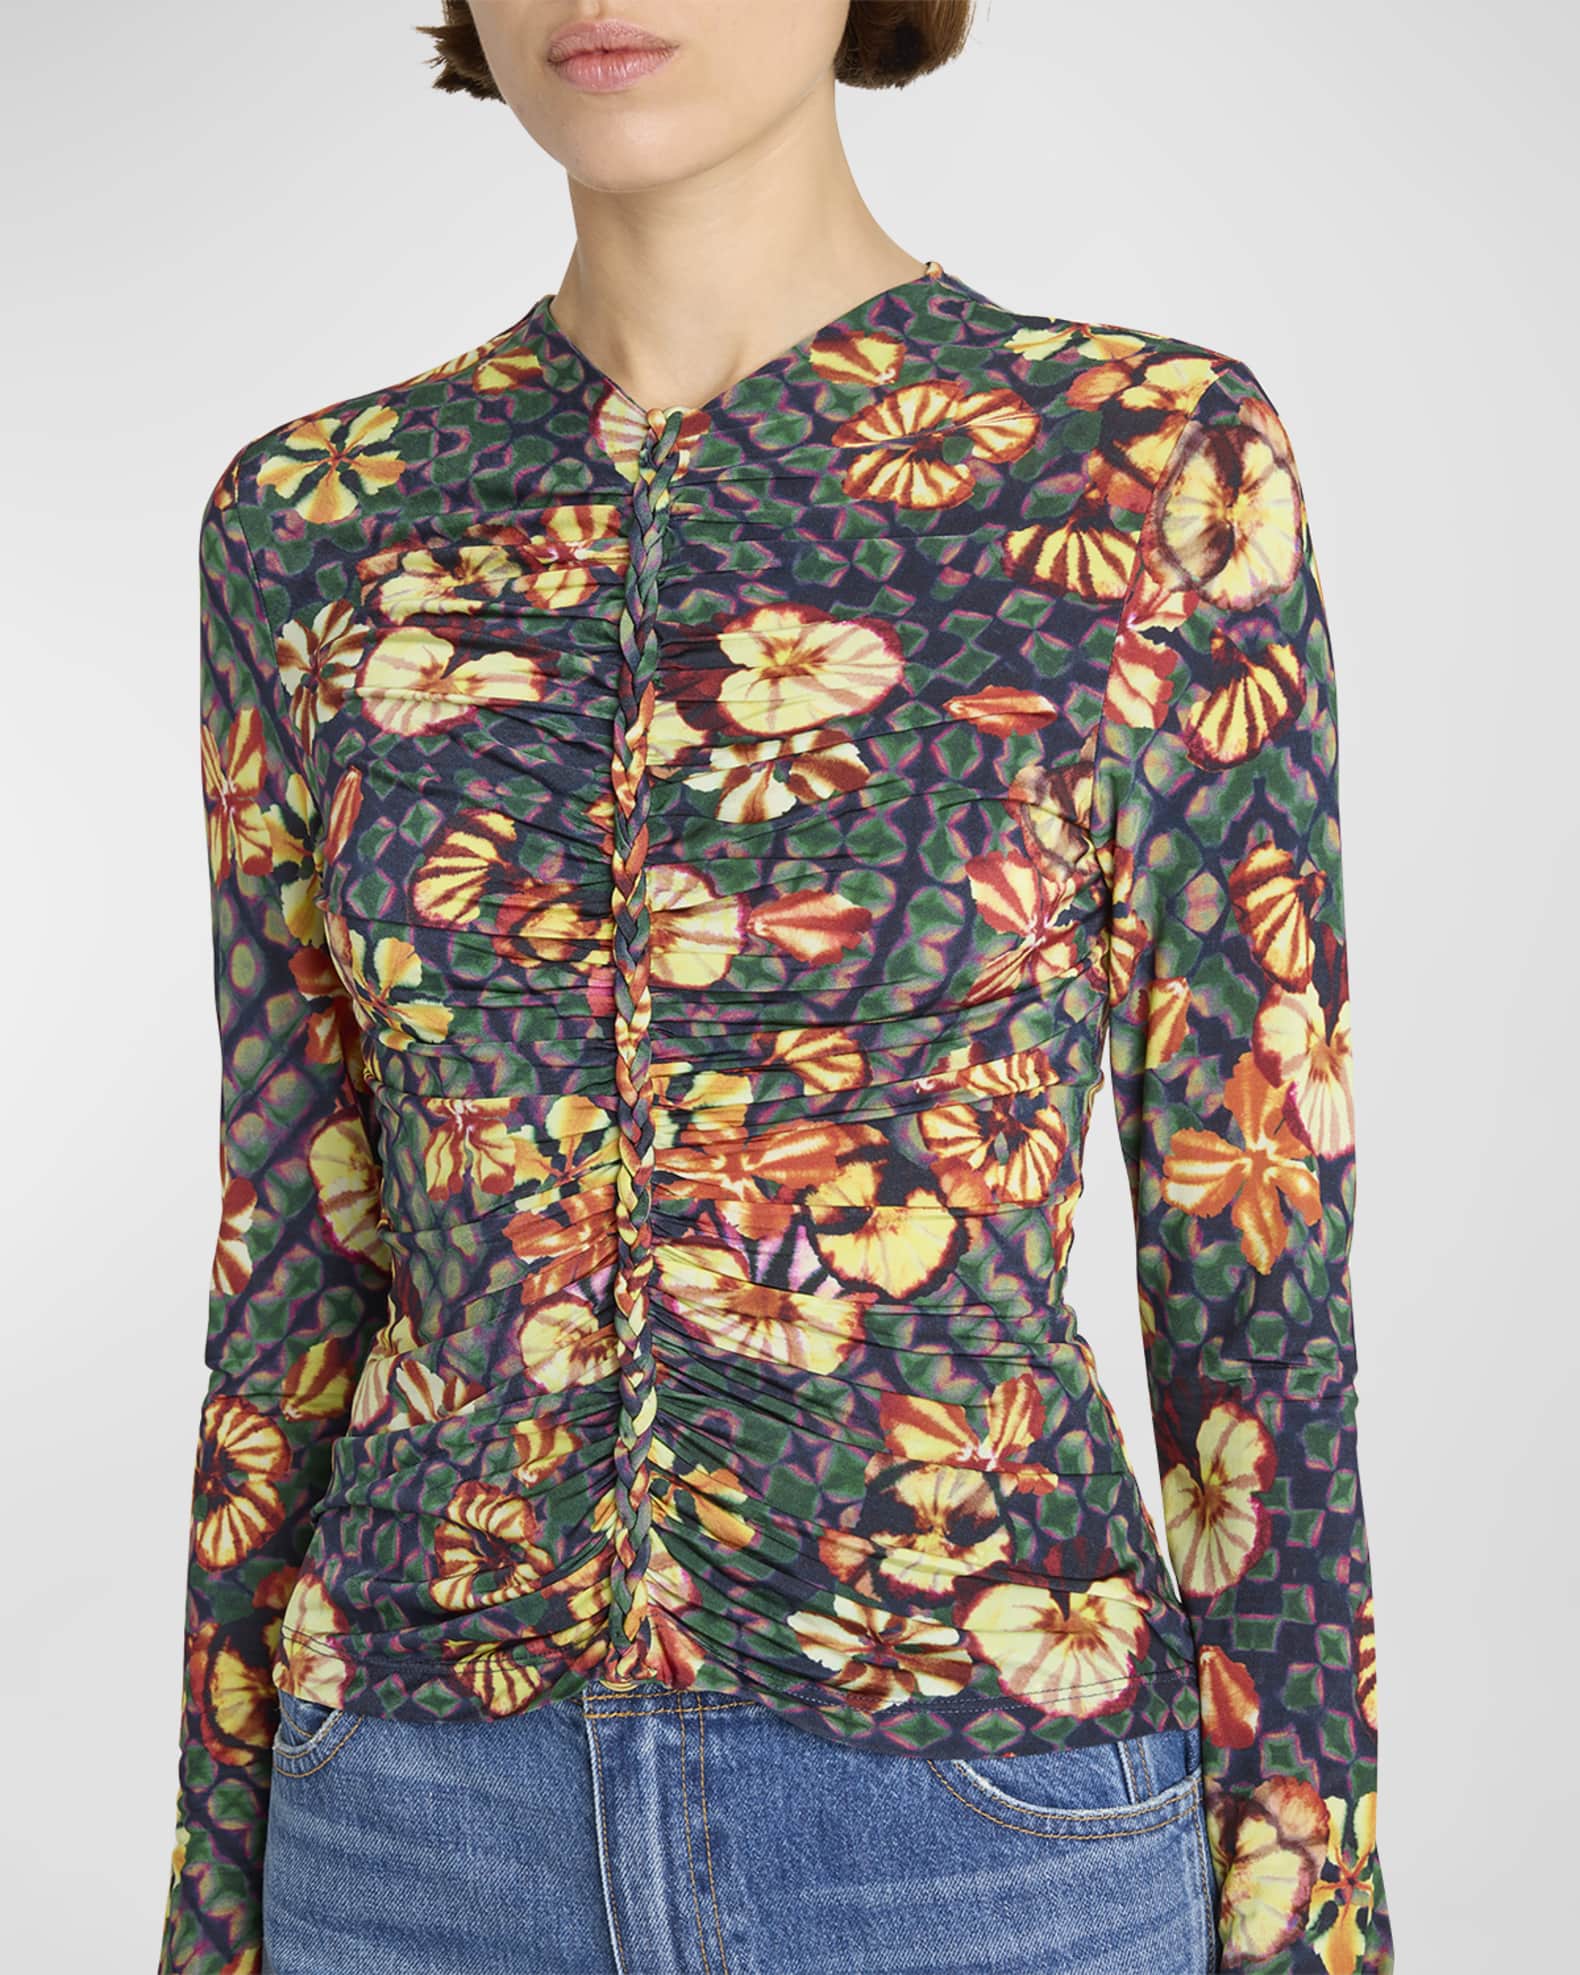 Ulla Johnson Ricci Long-Sleeve Printed Jersey Top | Neiman Marcus